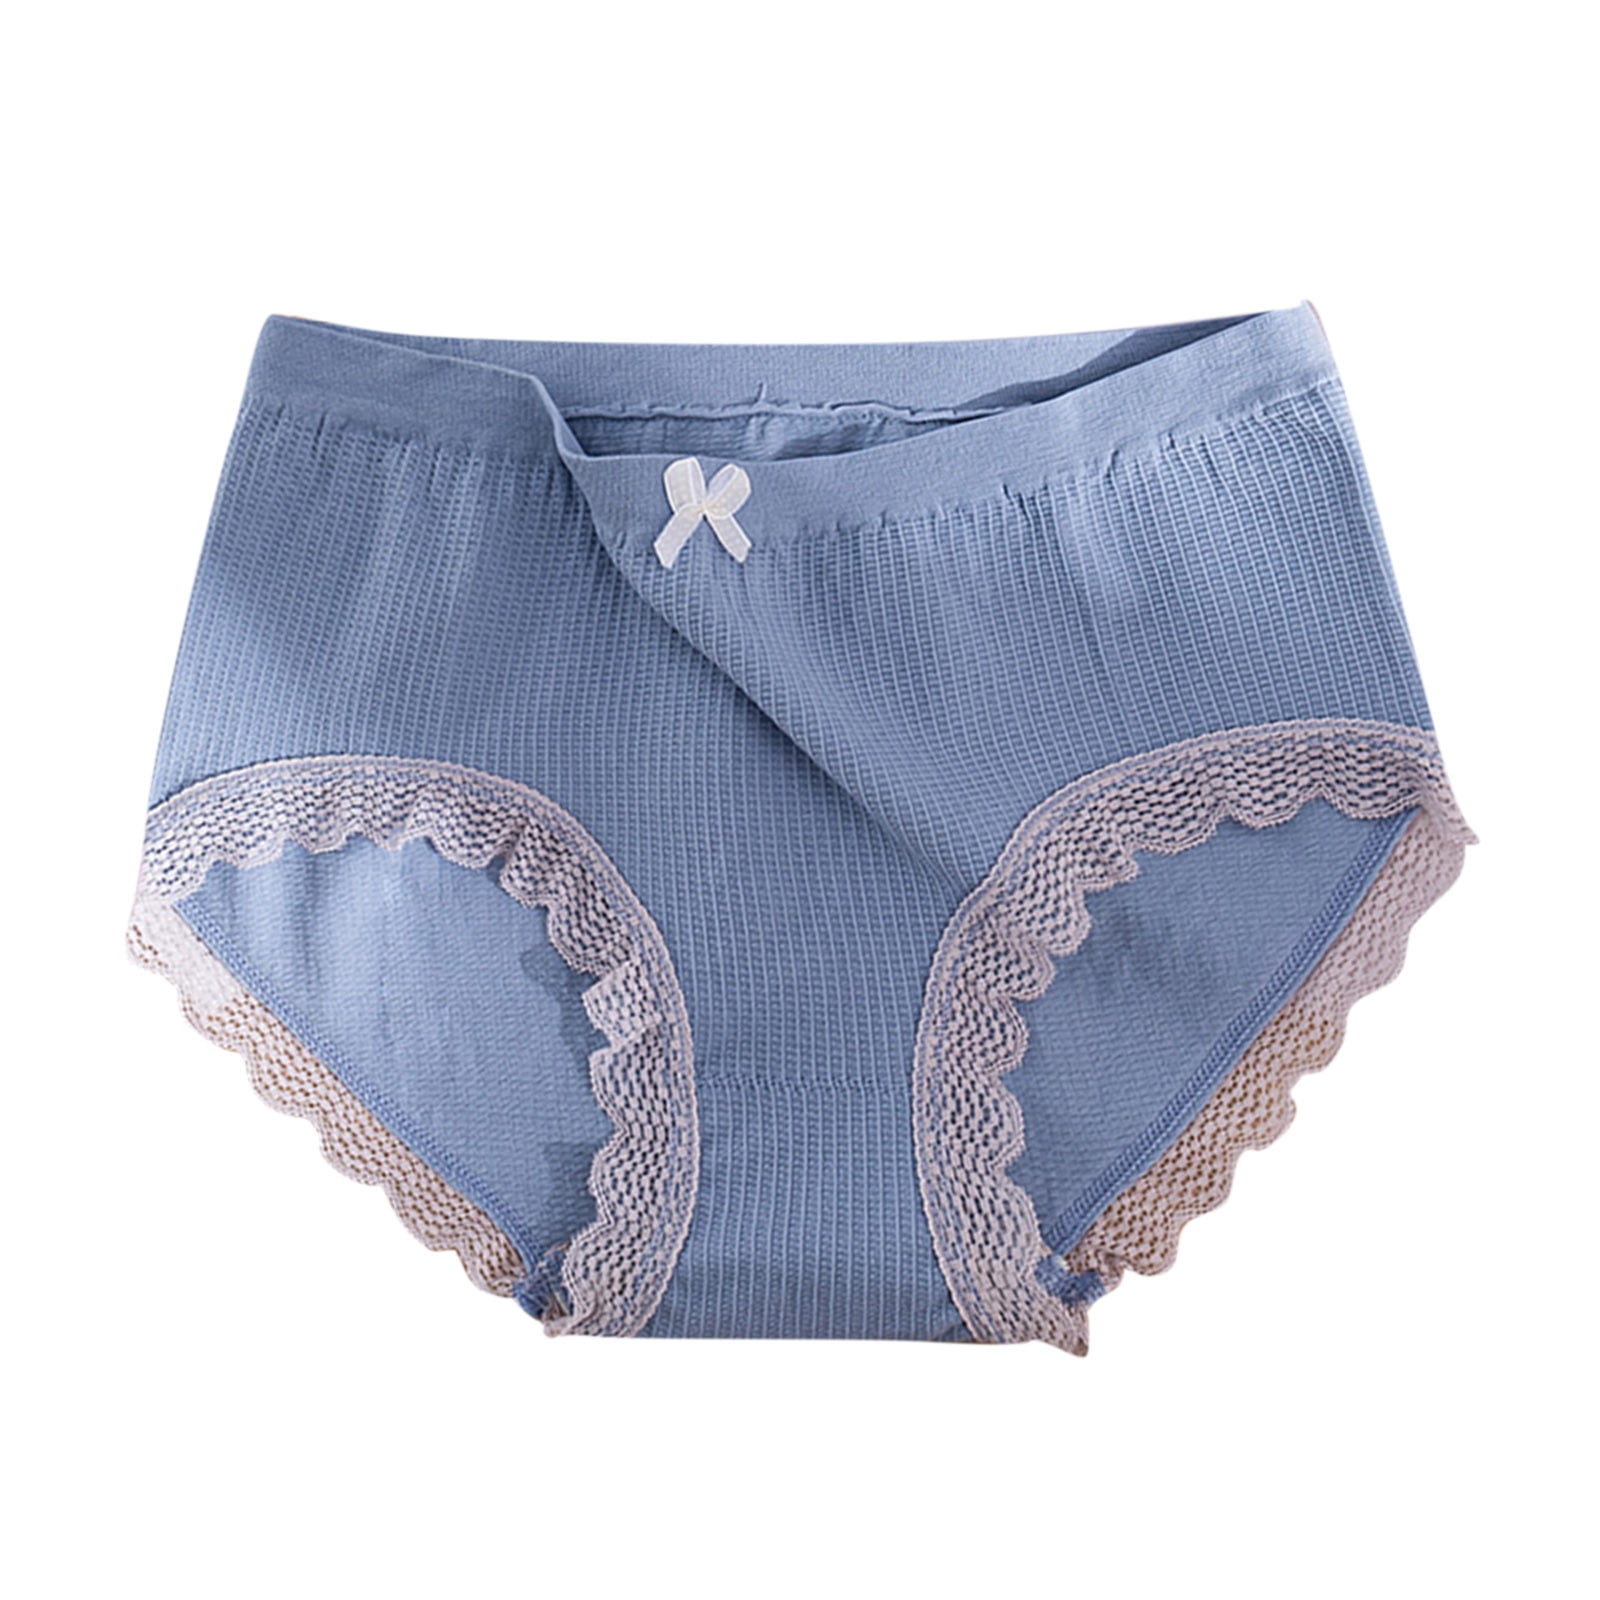 Aayomet Underwear Women Ladies Plus Size Solid Color Womens Glossy Seamless Underwear  Soft Mid Waist Briefs Panties,Blue XL 